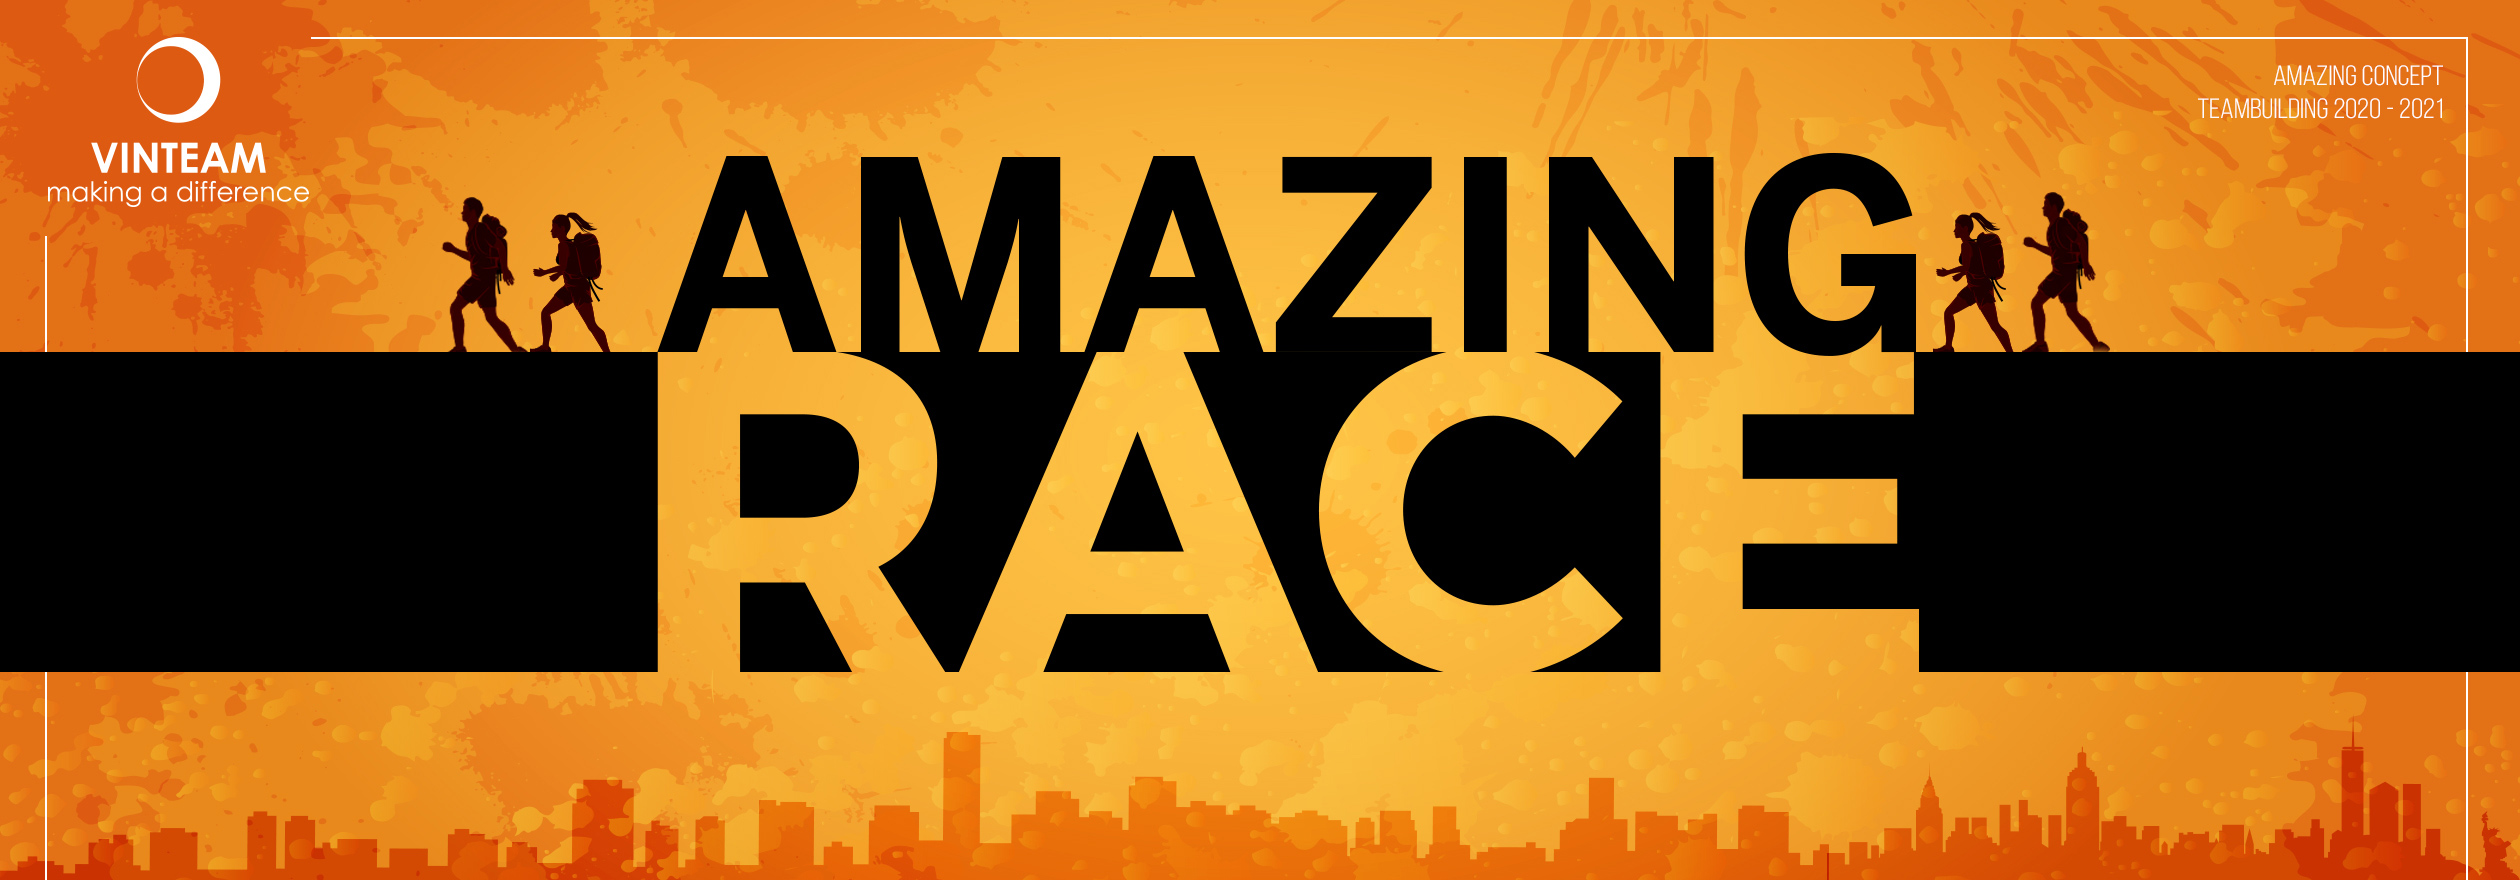 2-COVER-amazing-race